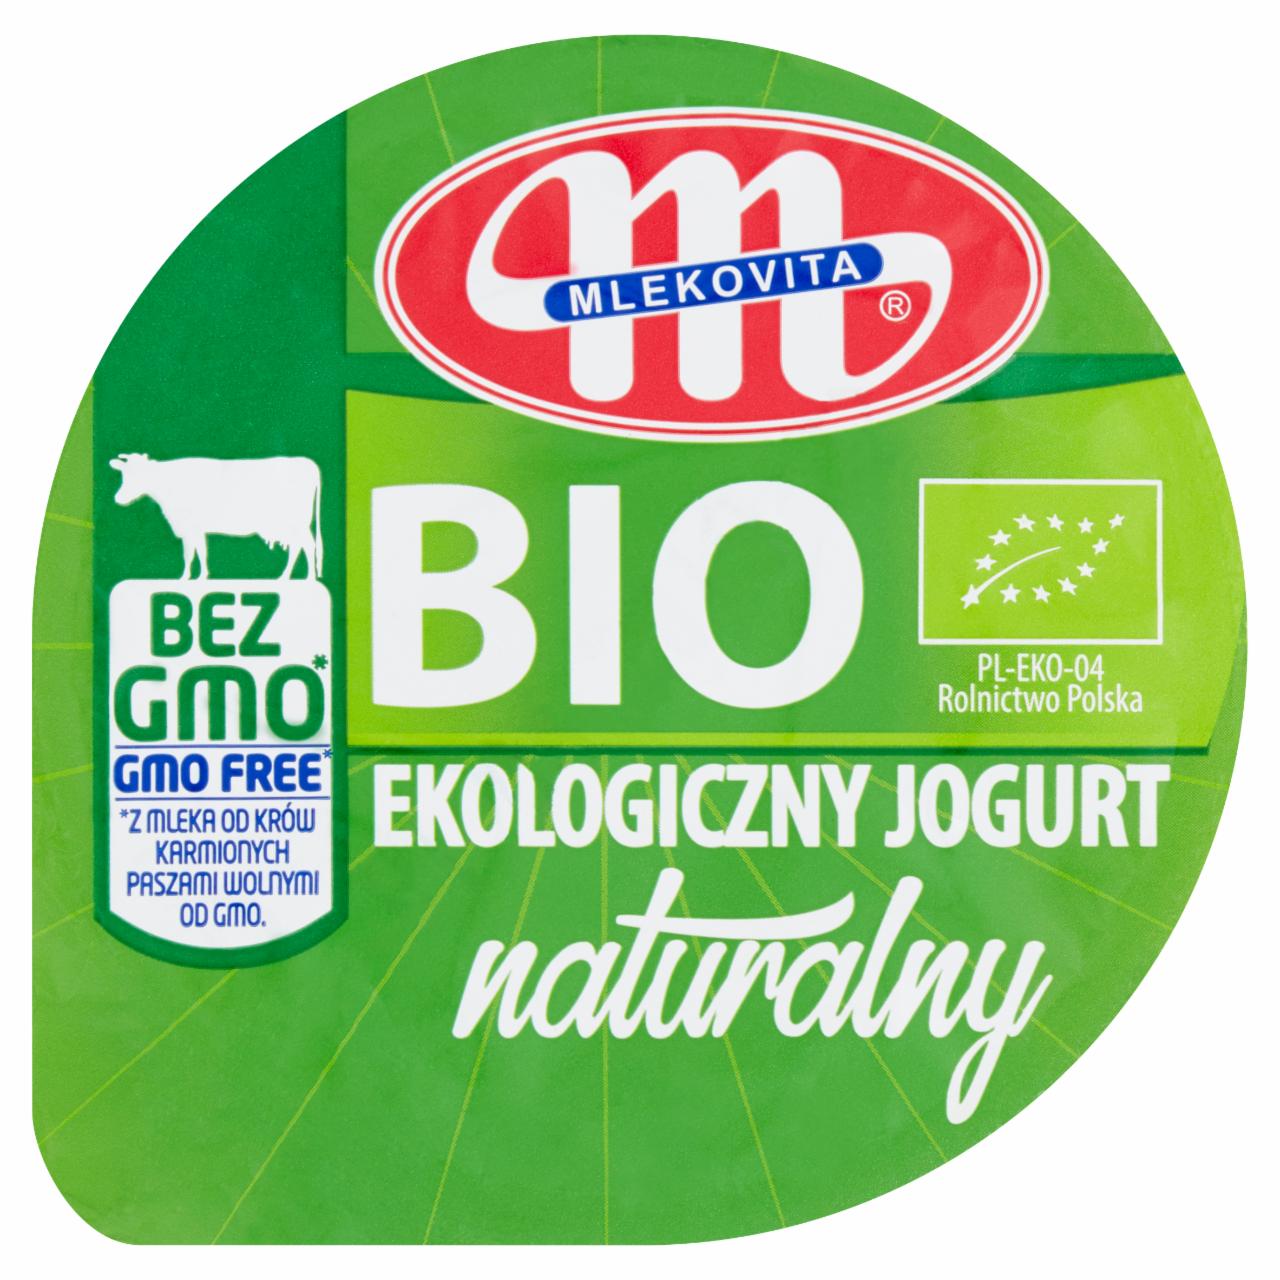 Zdjęcia - Mlekovita BIO Ekologiczny jogurt naturalny 200 g